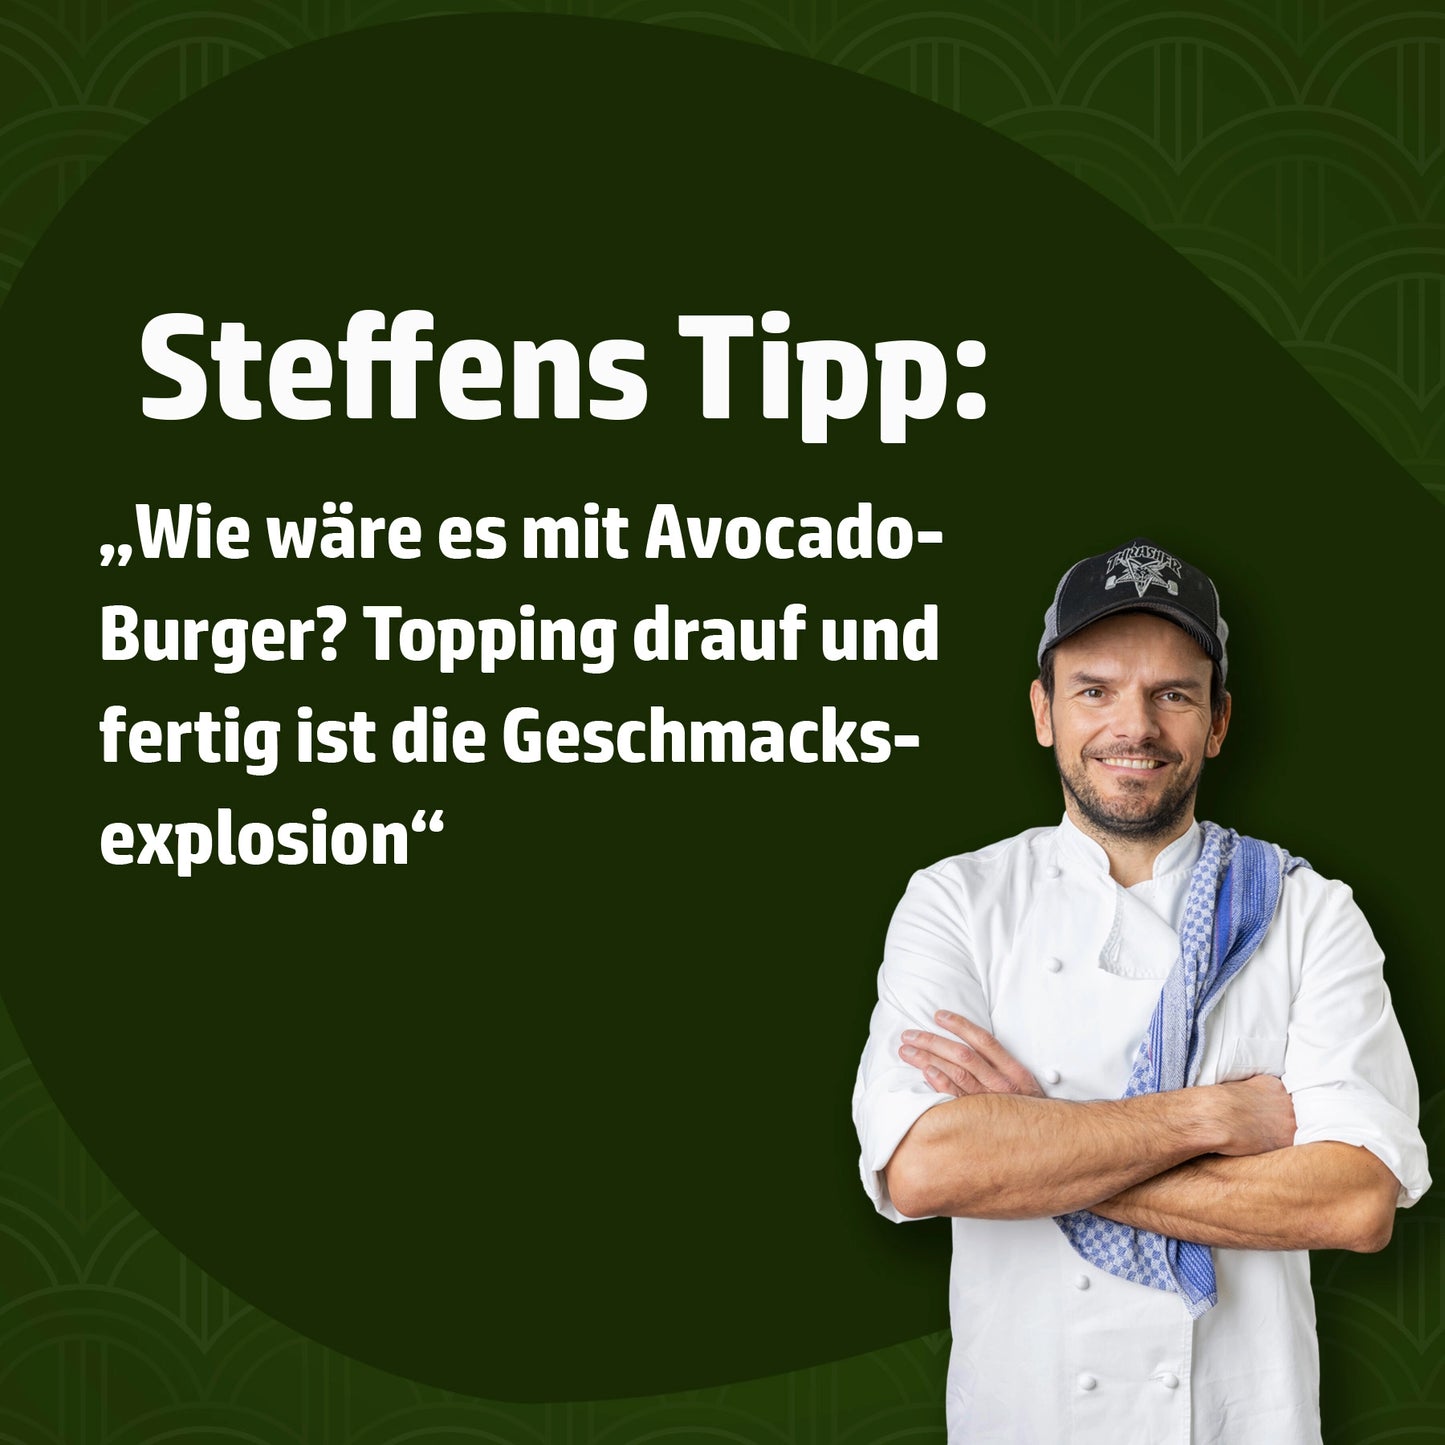 Hensslers Avocado Topping online kaufen